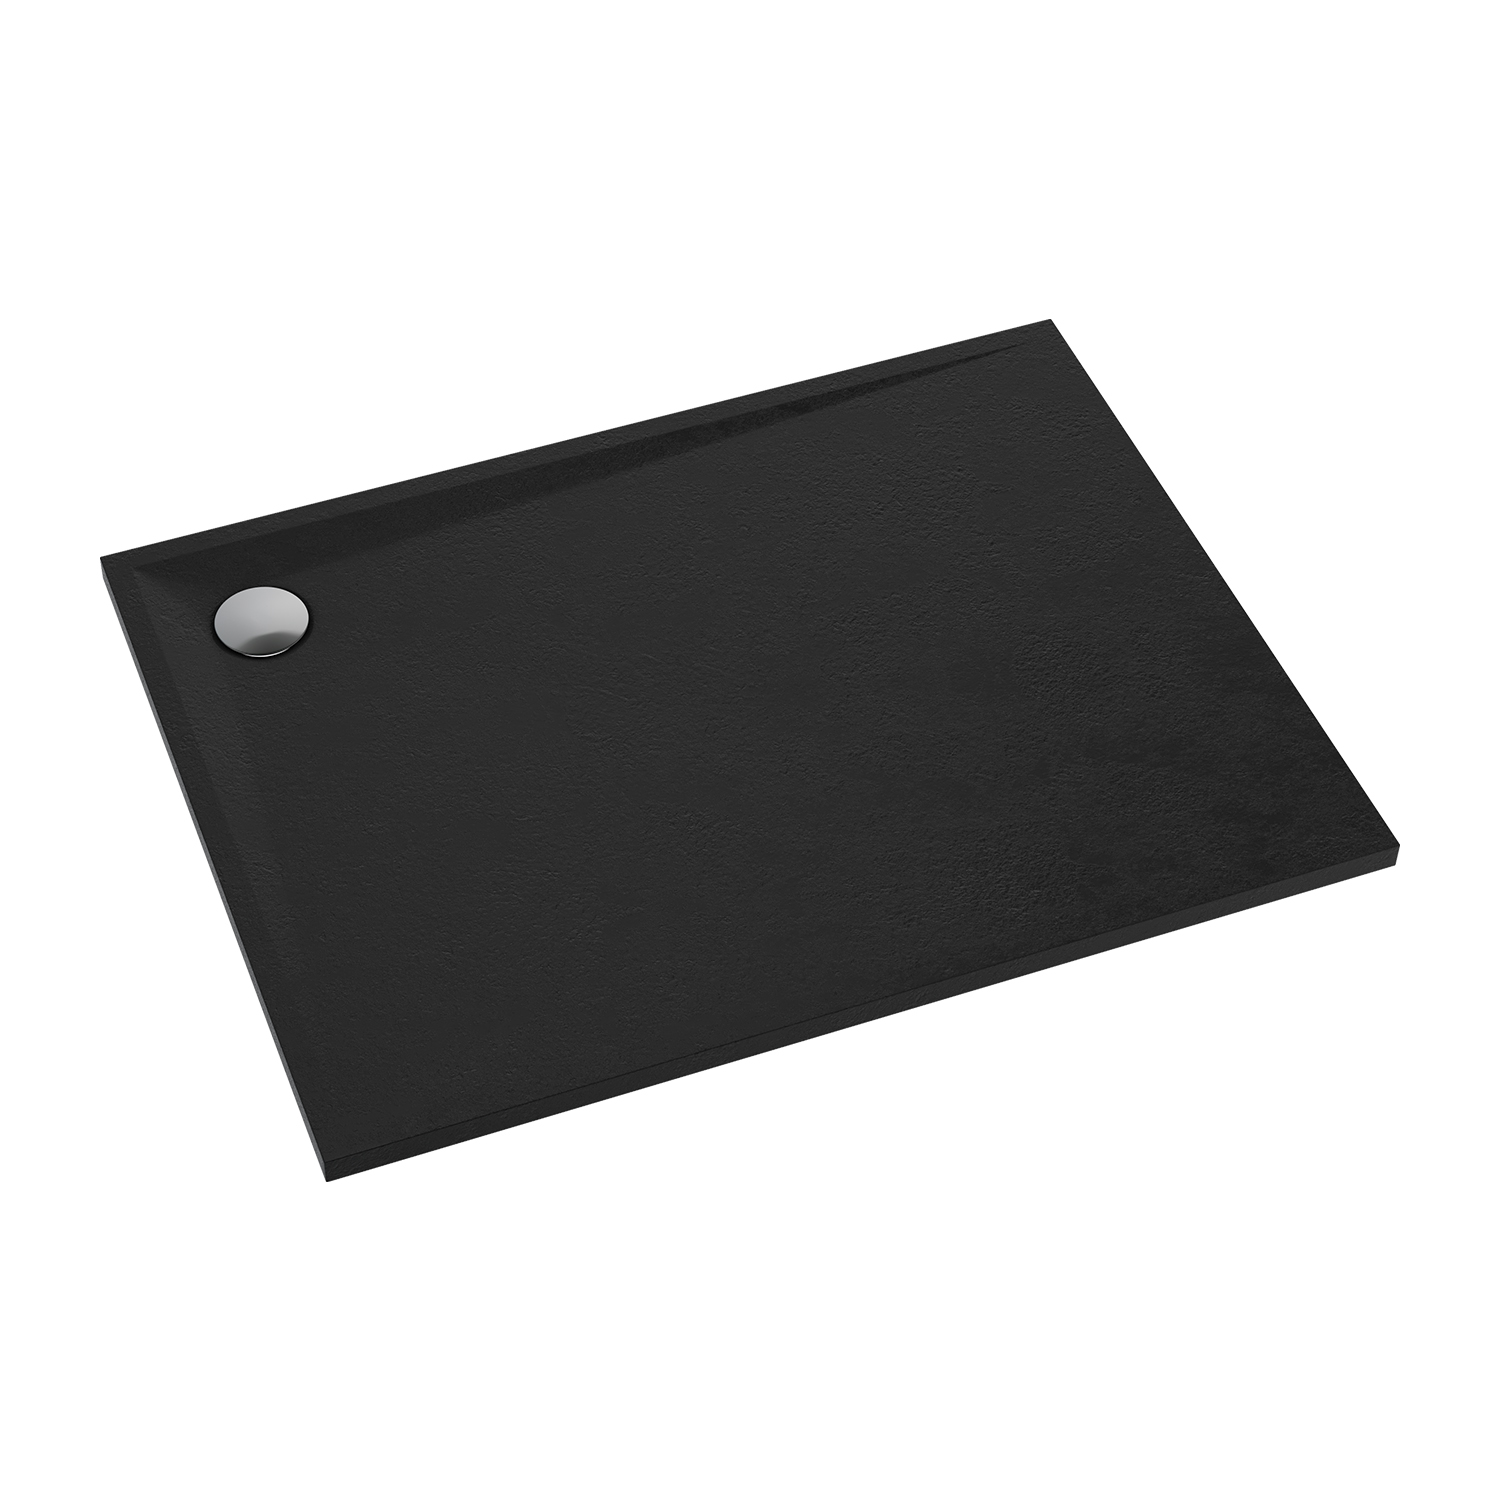 slate-effect shower tray, 80 x 120 cm